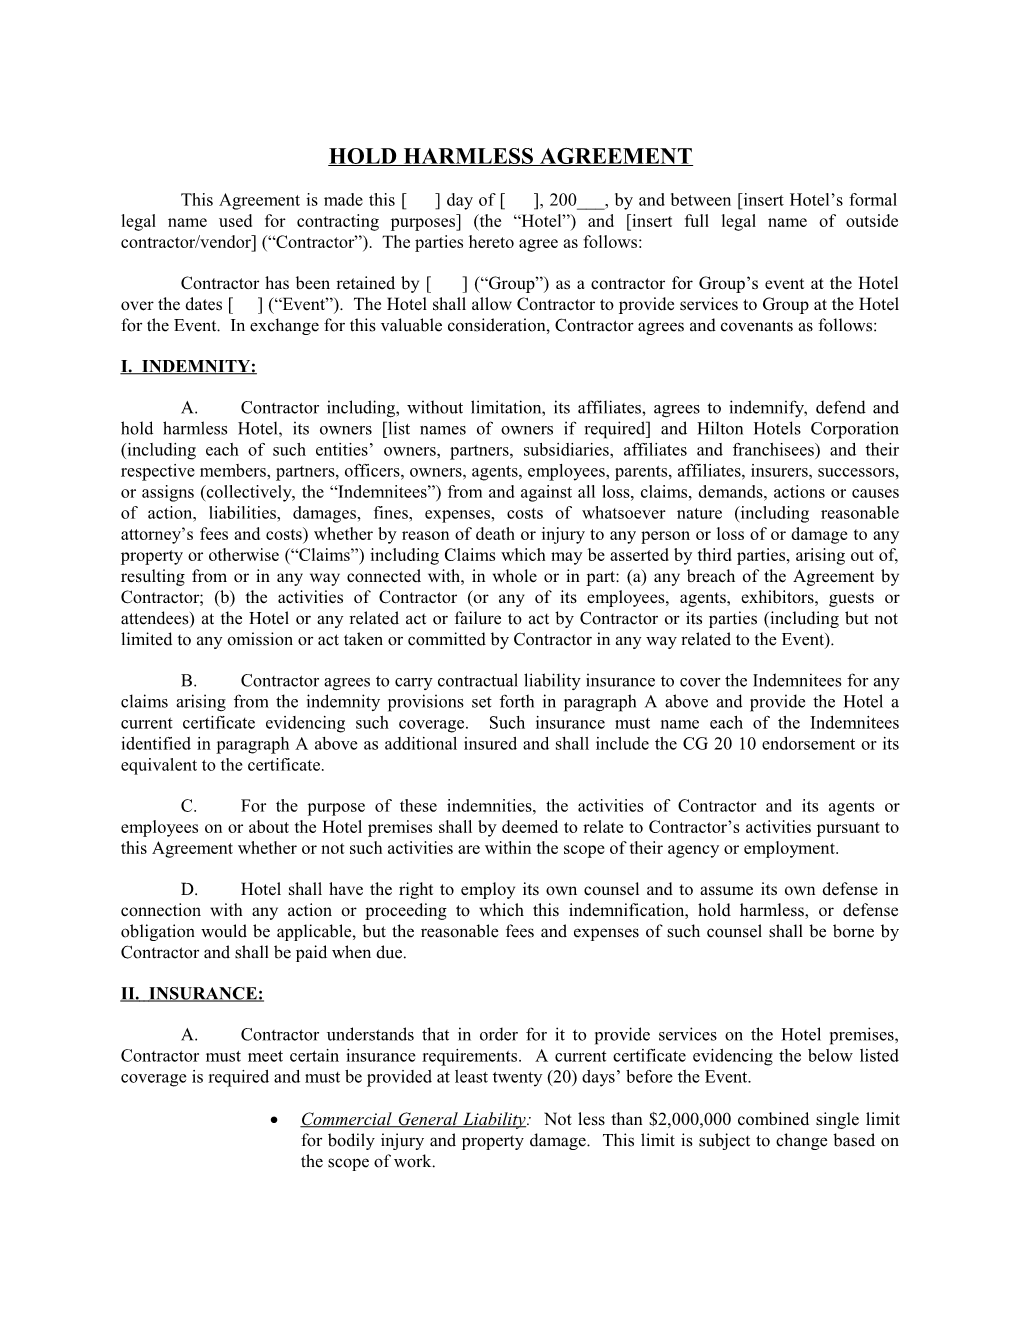 Hold Harmless Agreement General - Onq Insider (00056682-5)